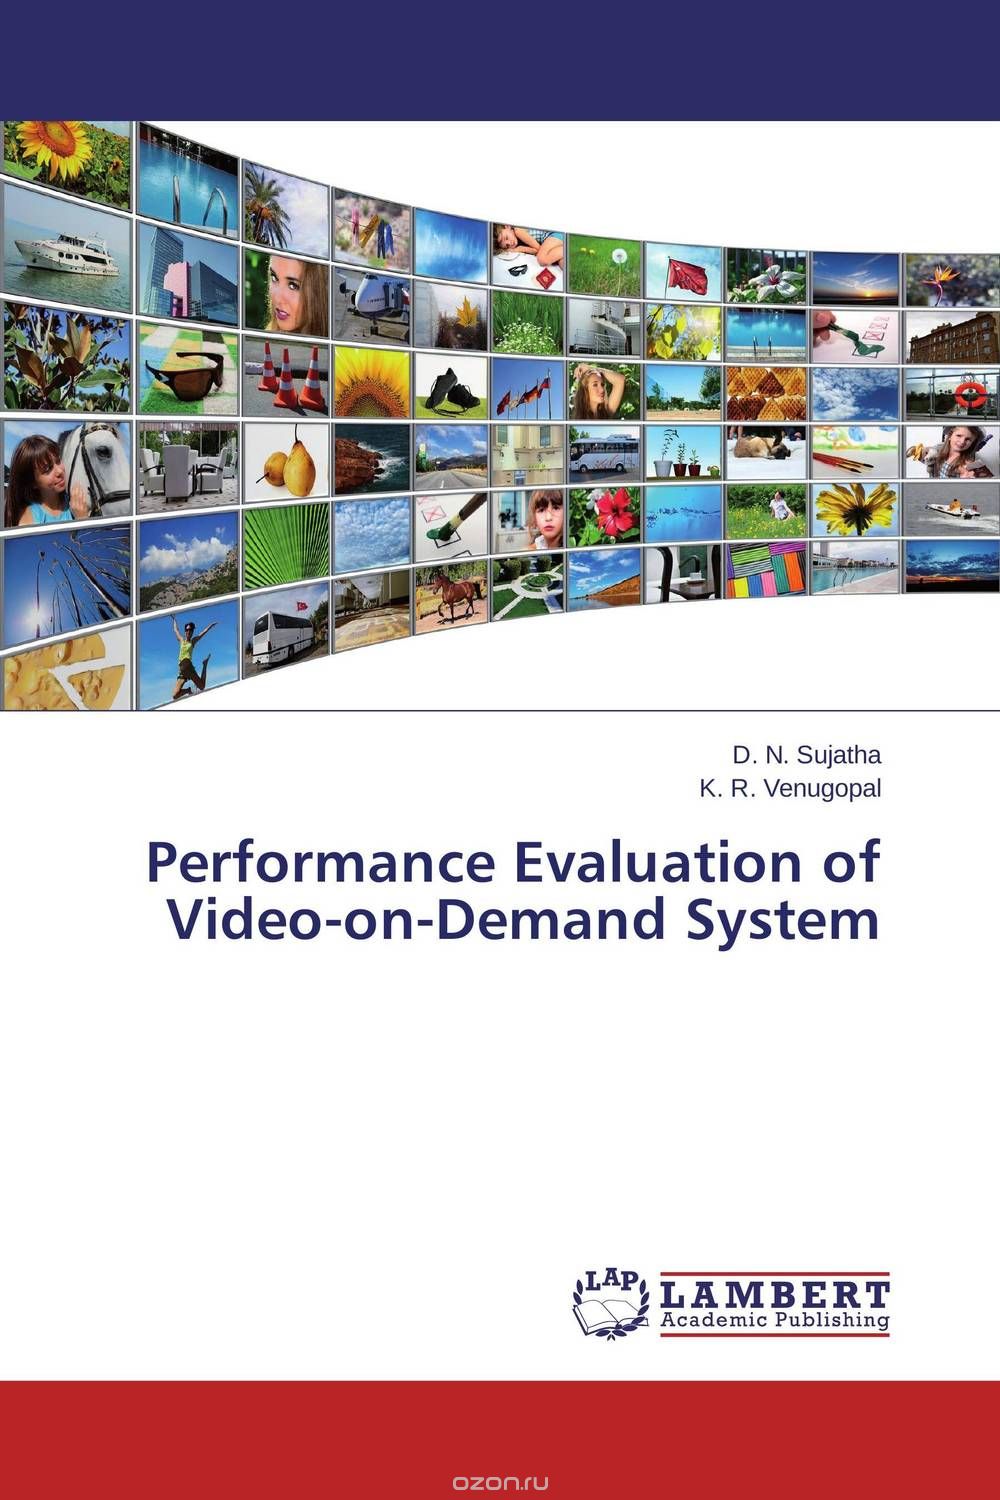 Скачать книгу "Performance Evaluation of Video-on-Demand System"